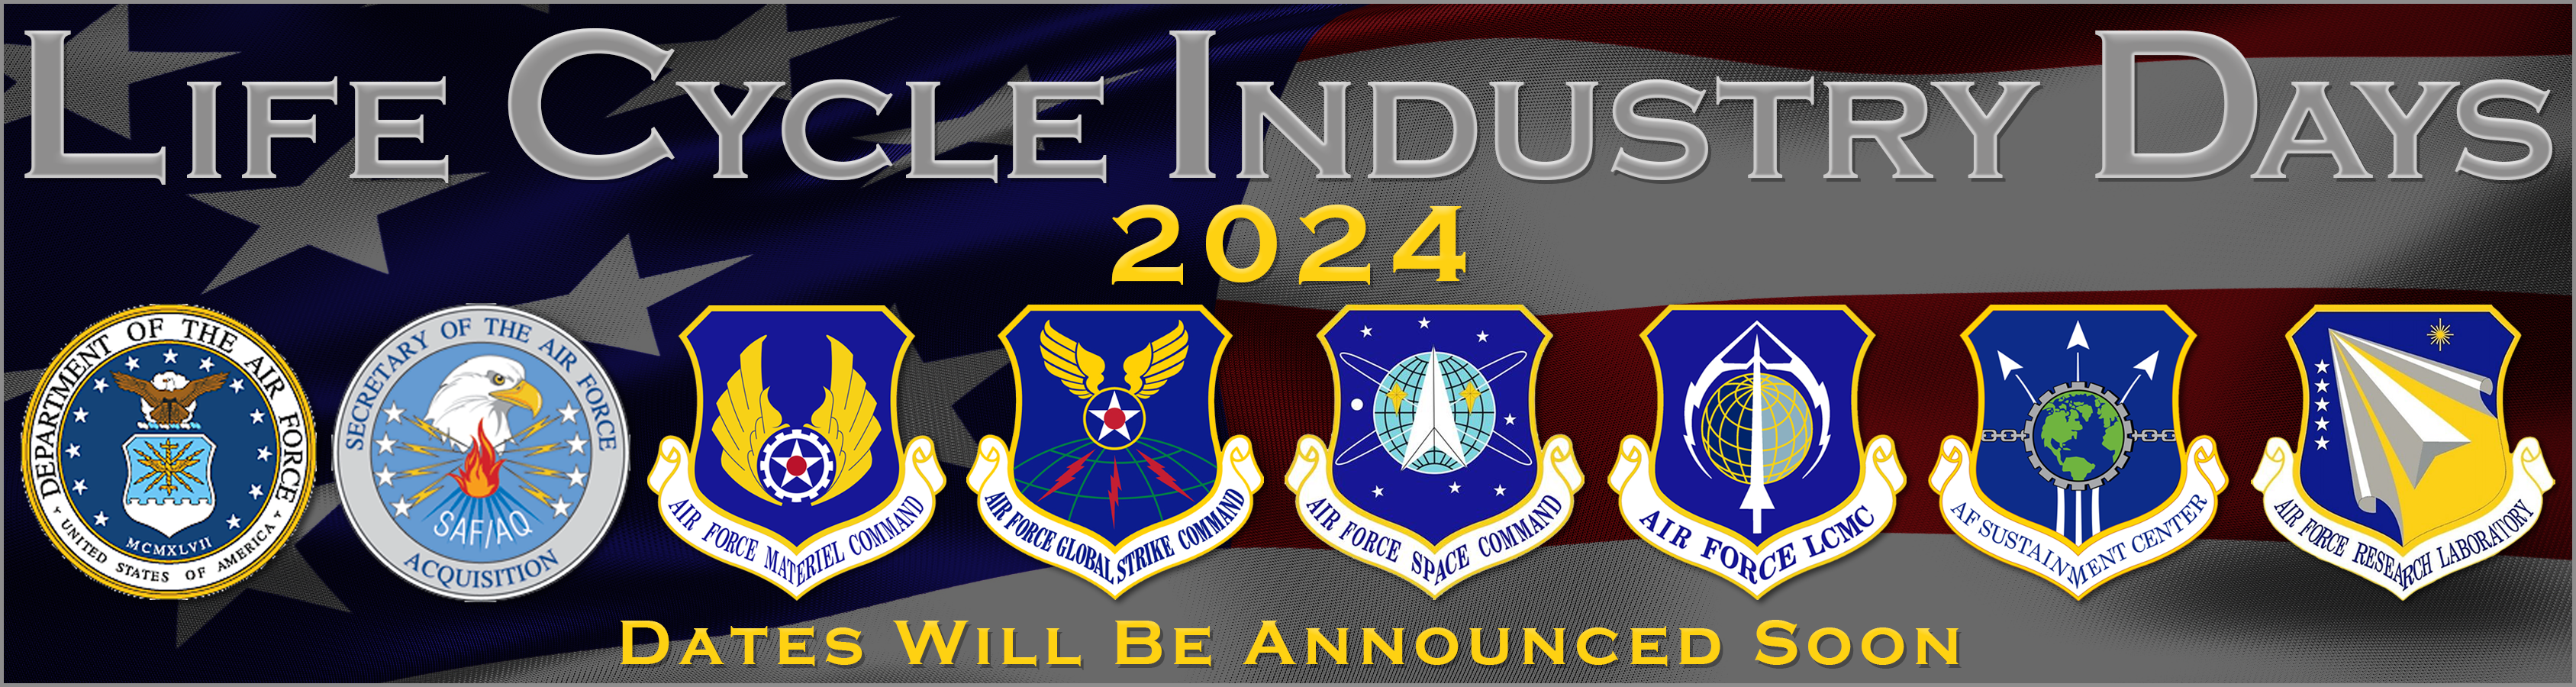 LCID 2024 banner